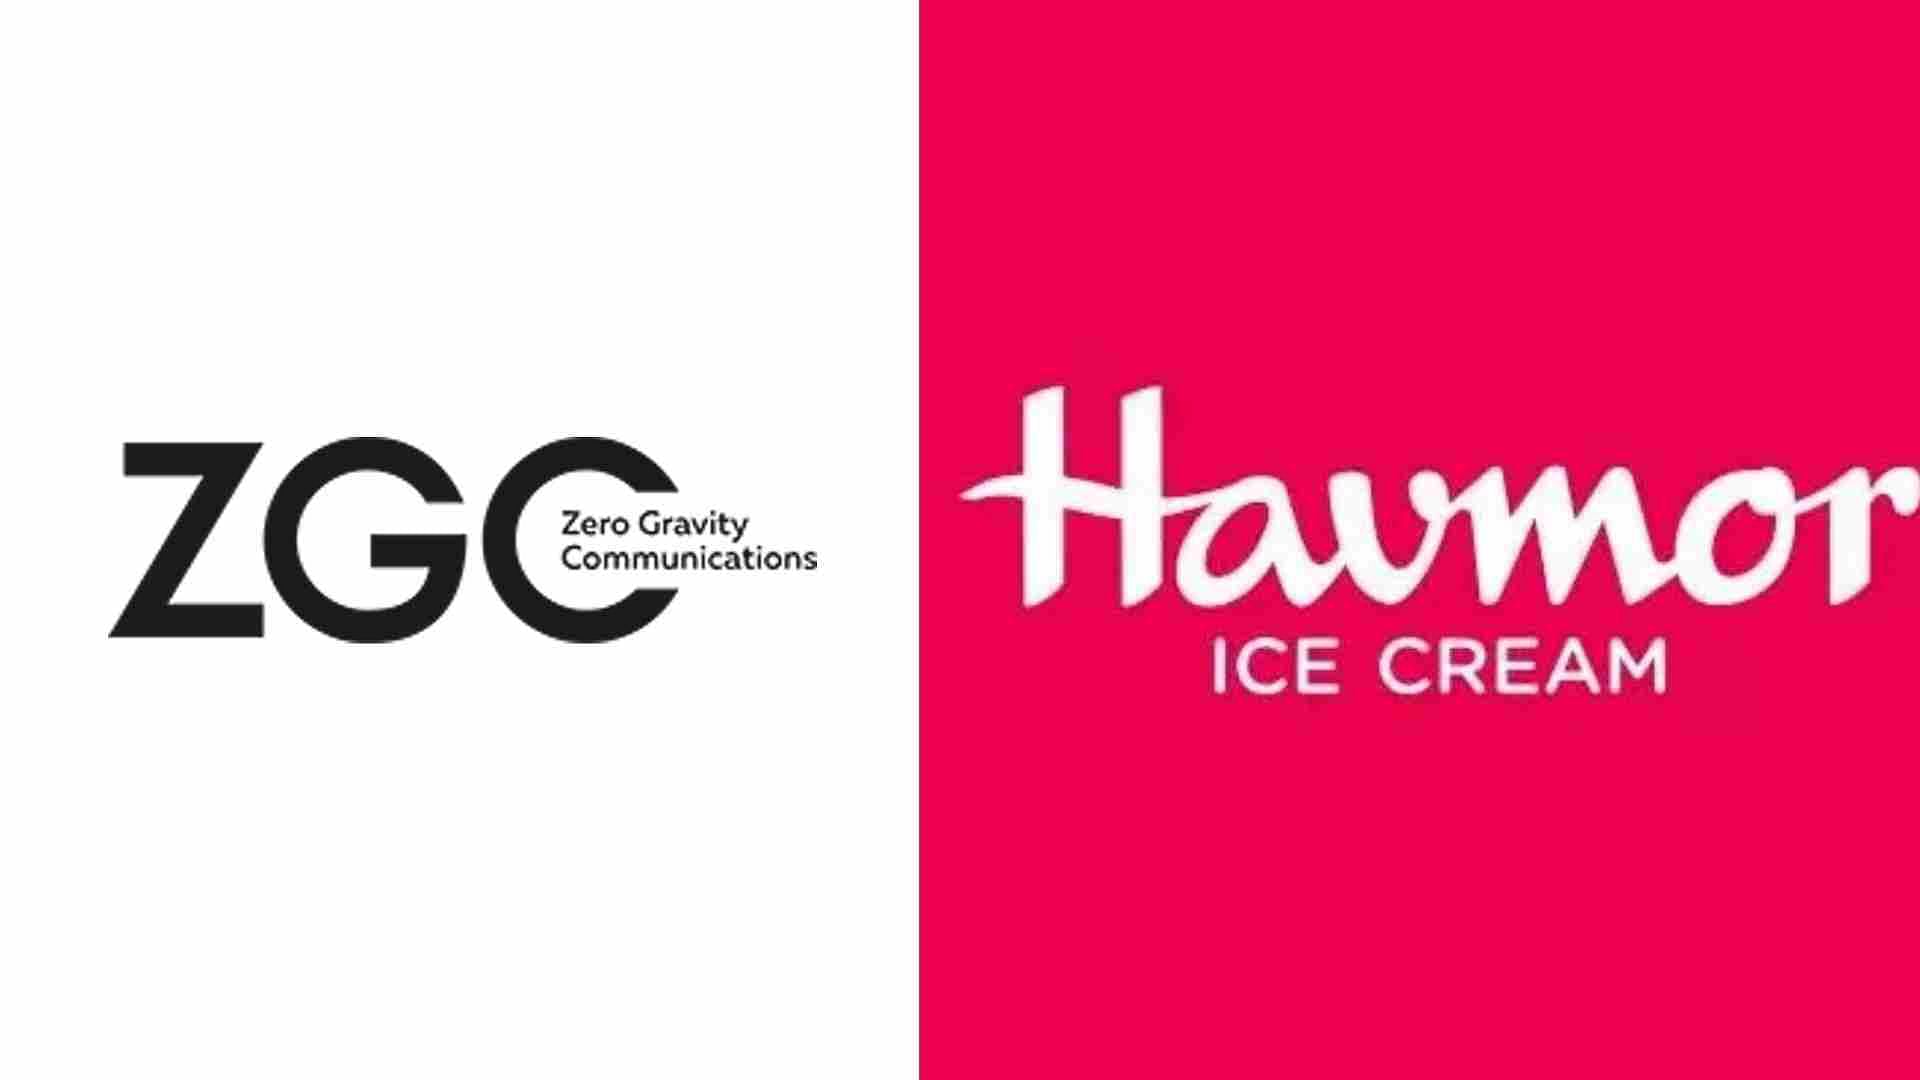 Siddharth Desai - Digital Marketing Manager at Havmor Ice Cream Ltd | The  Org